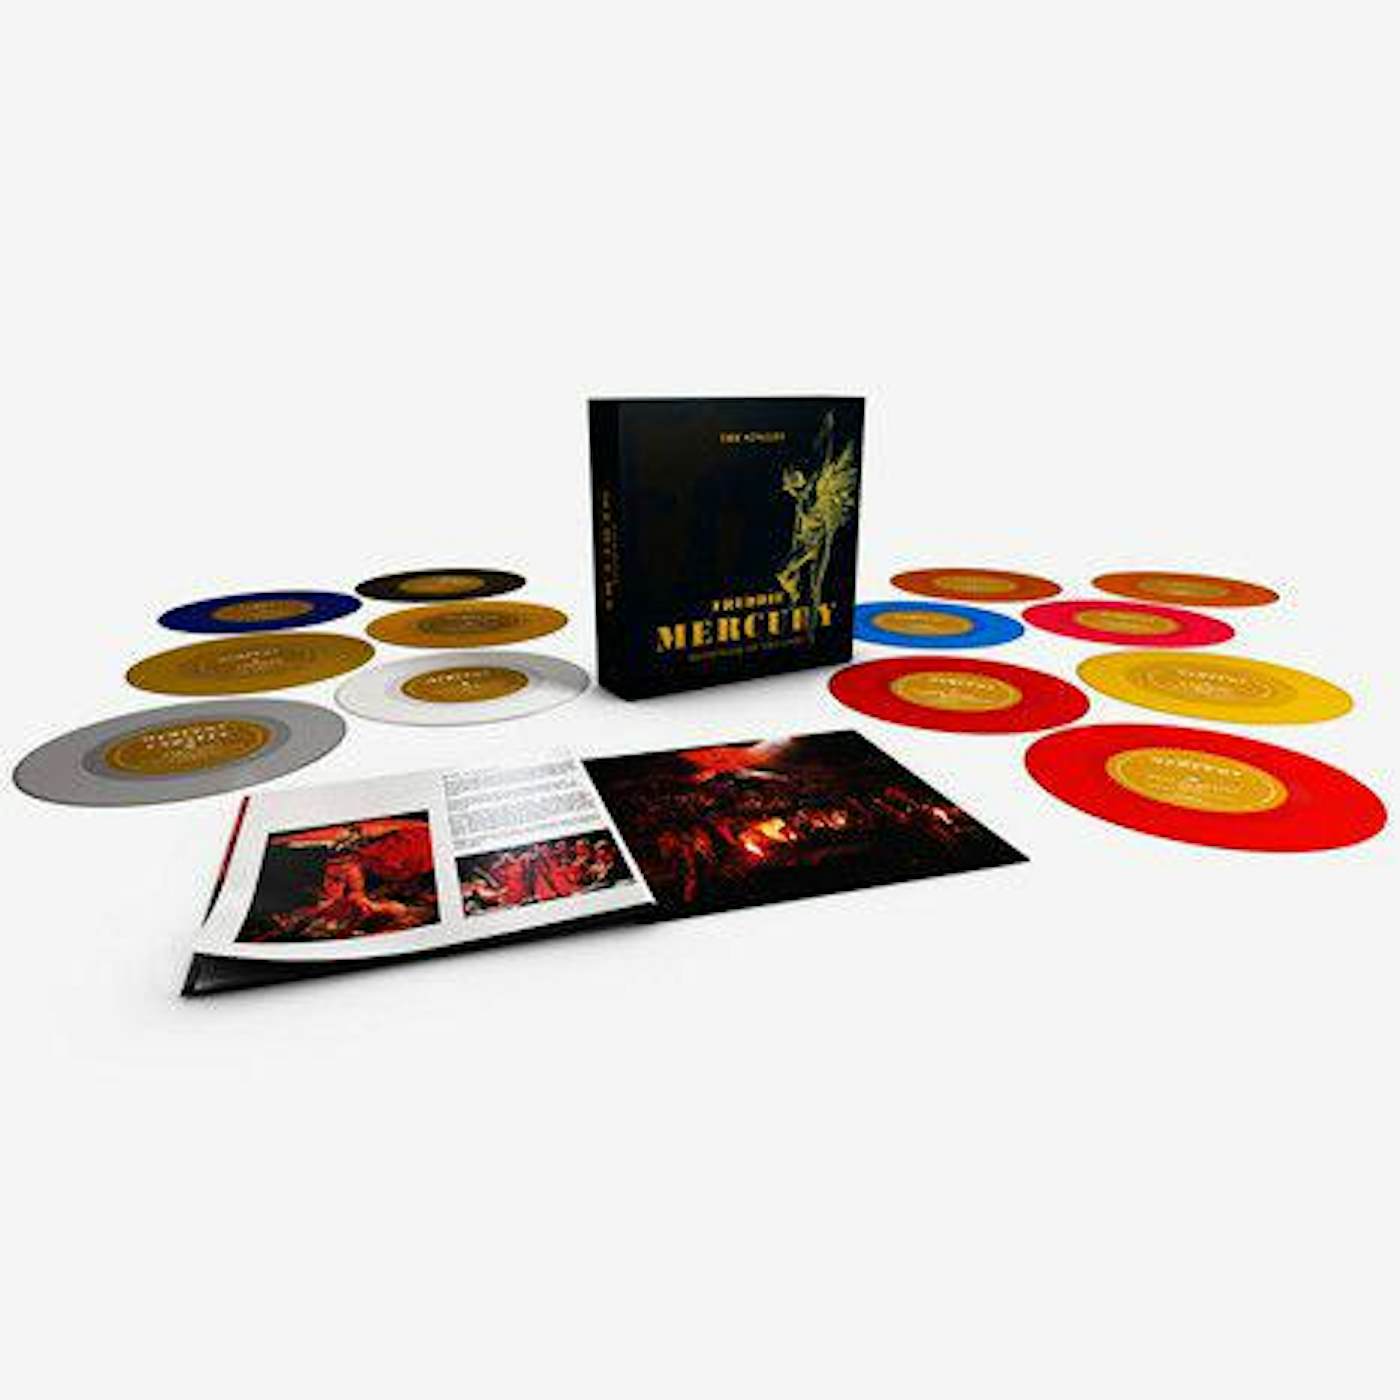 Freddie Mercury Messenger of the Gods (The Singles) Limited Edition Box Set (Vinyl)